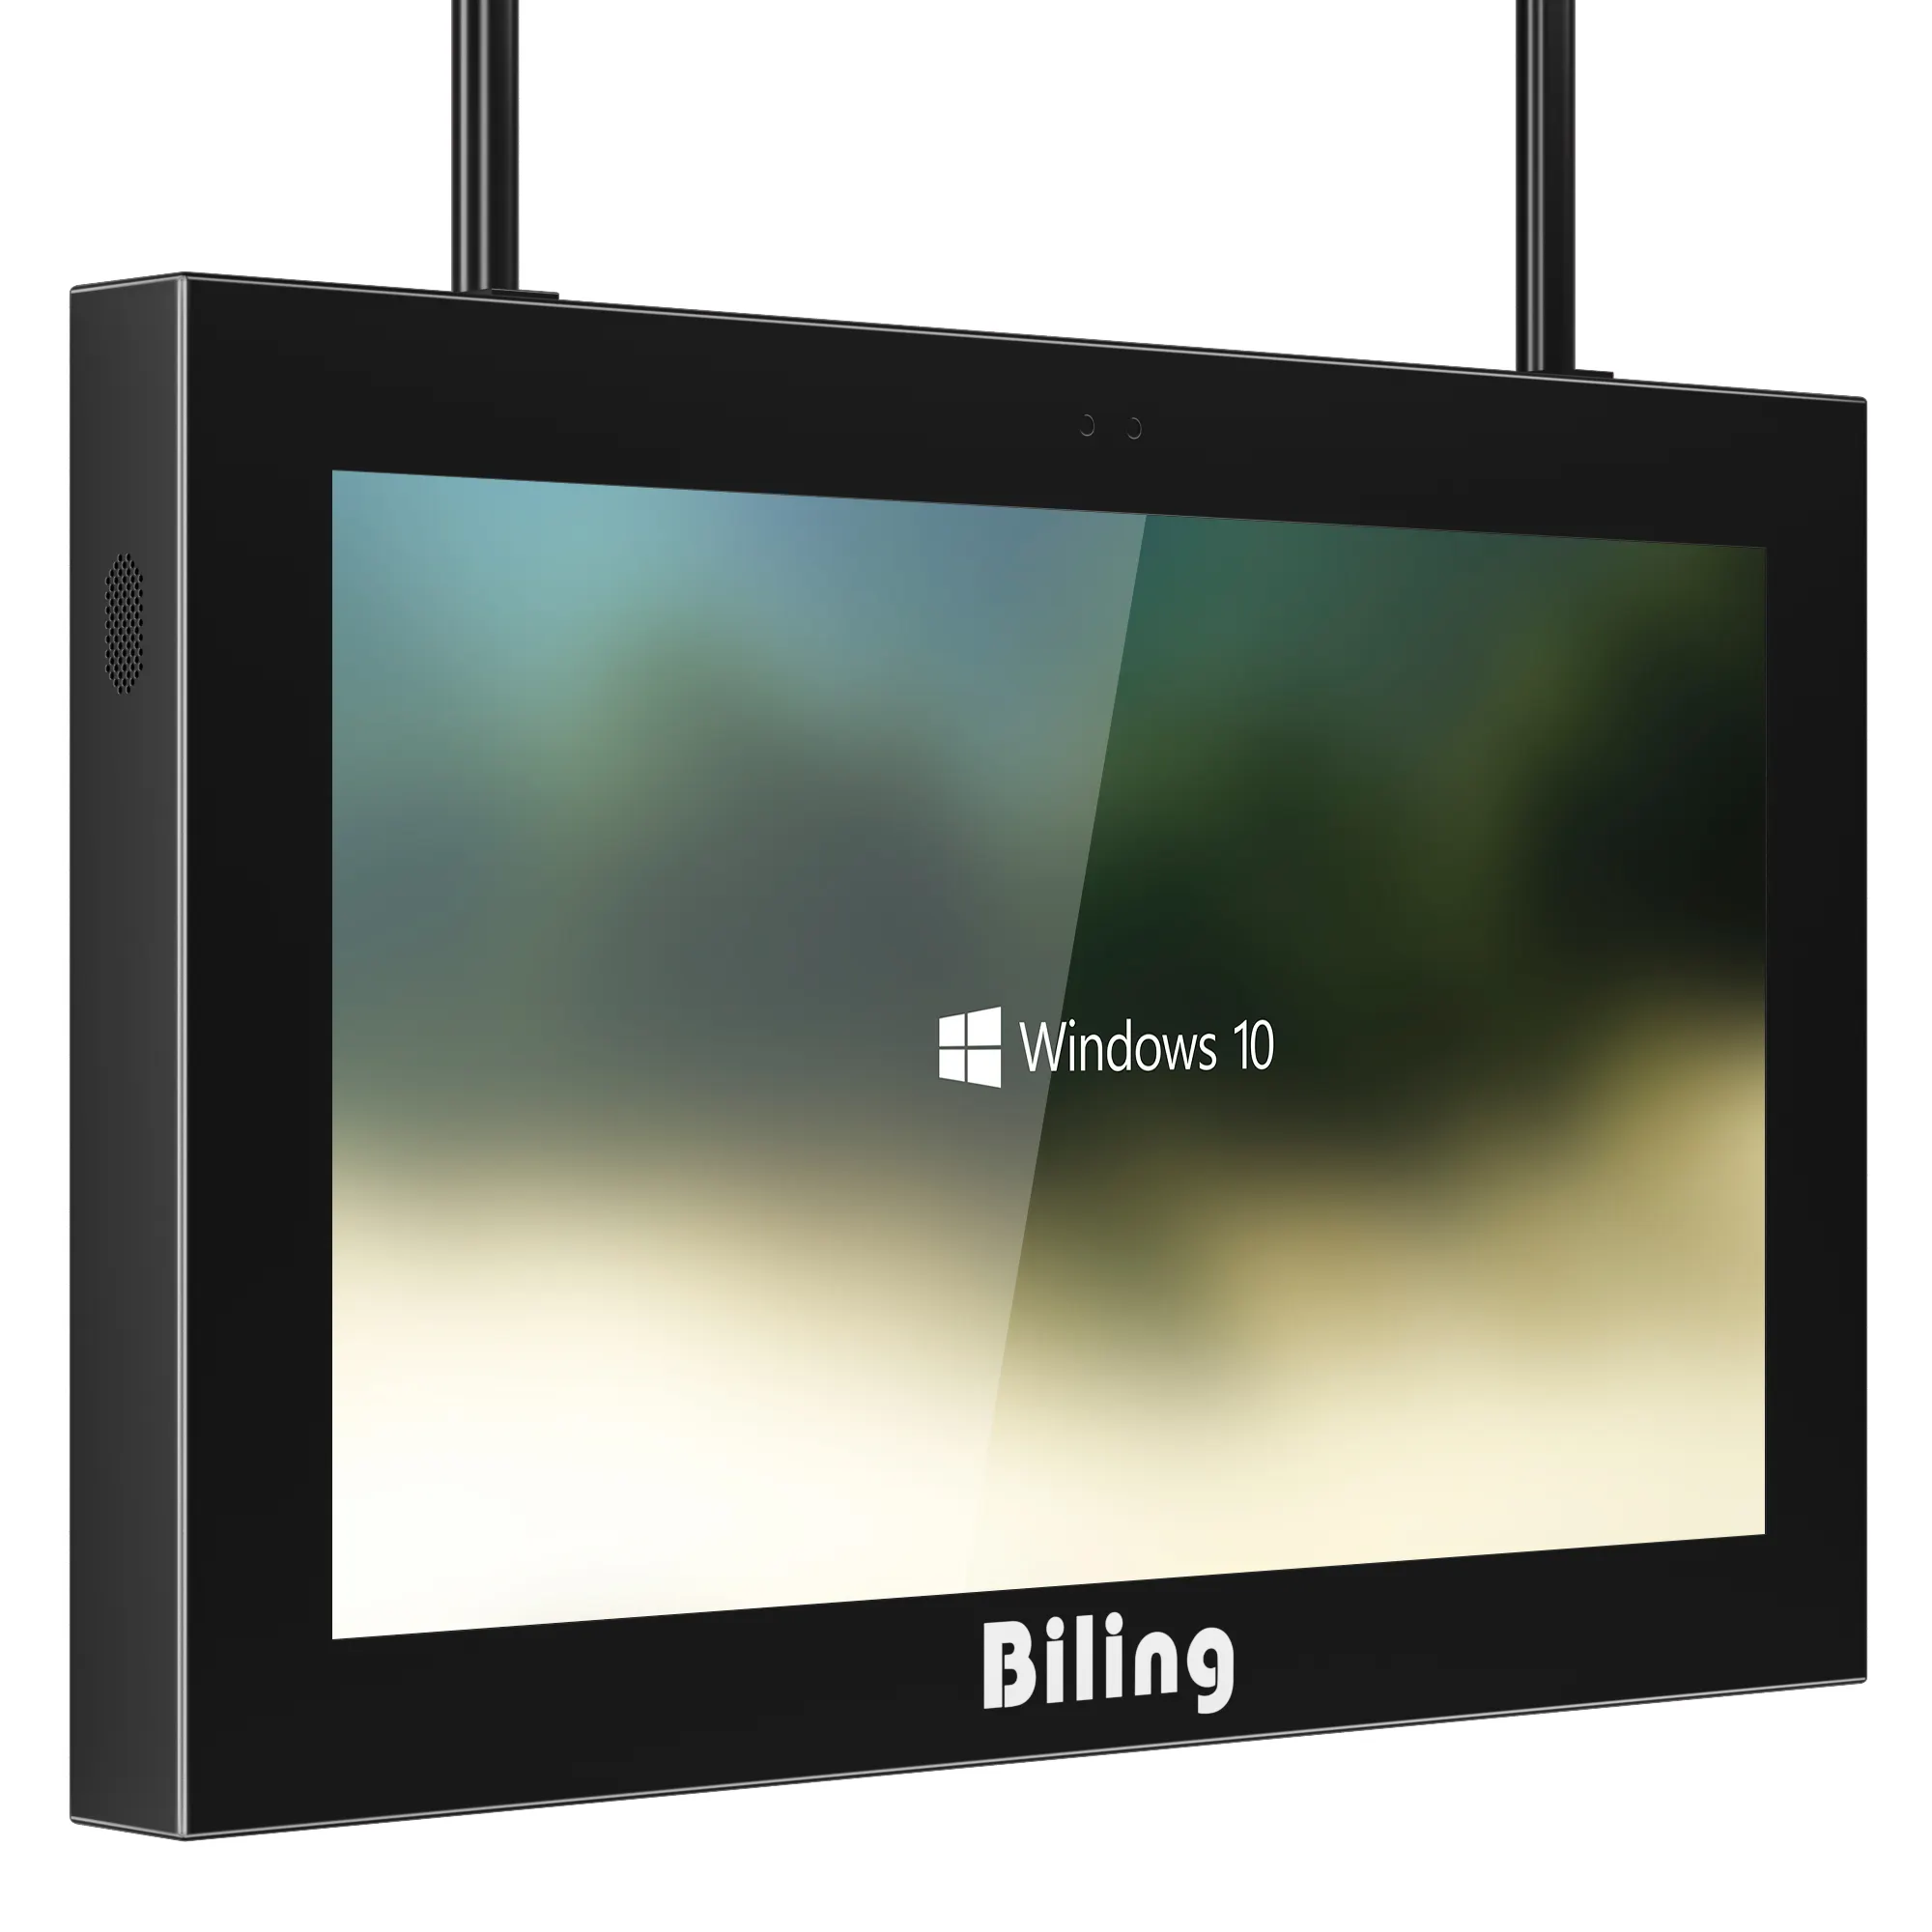 Tampilan Iklan Digital Pemasangan Di Dinding 4K HD Ultratipis Layar Ganda Lift Lcd